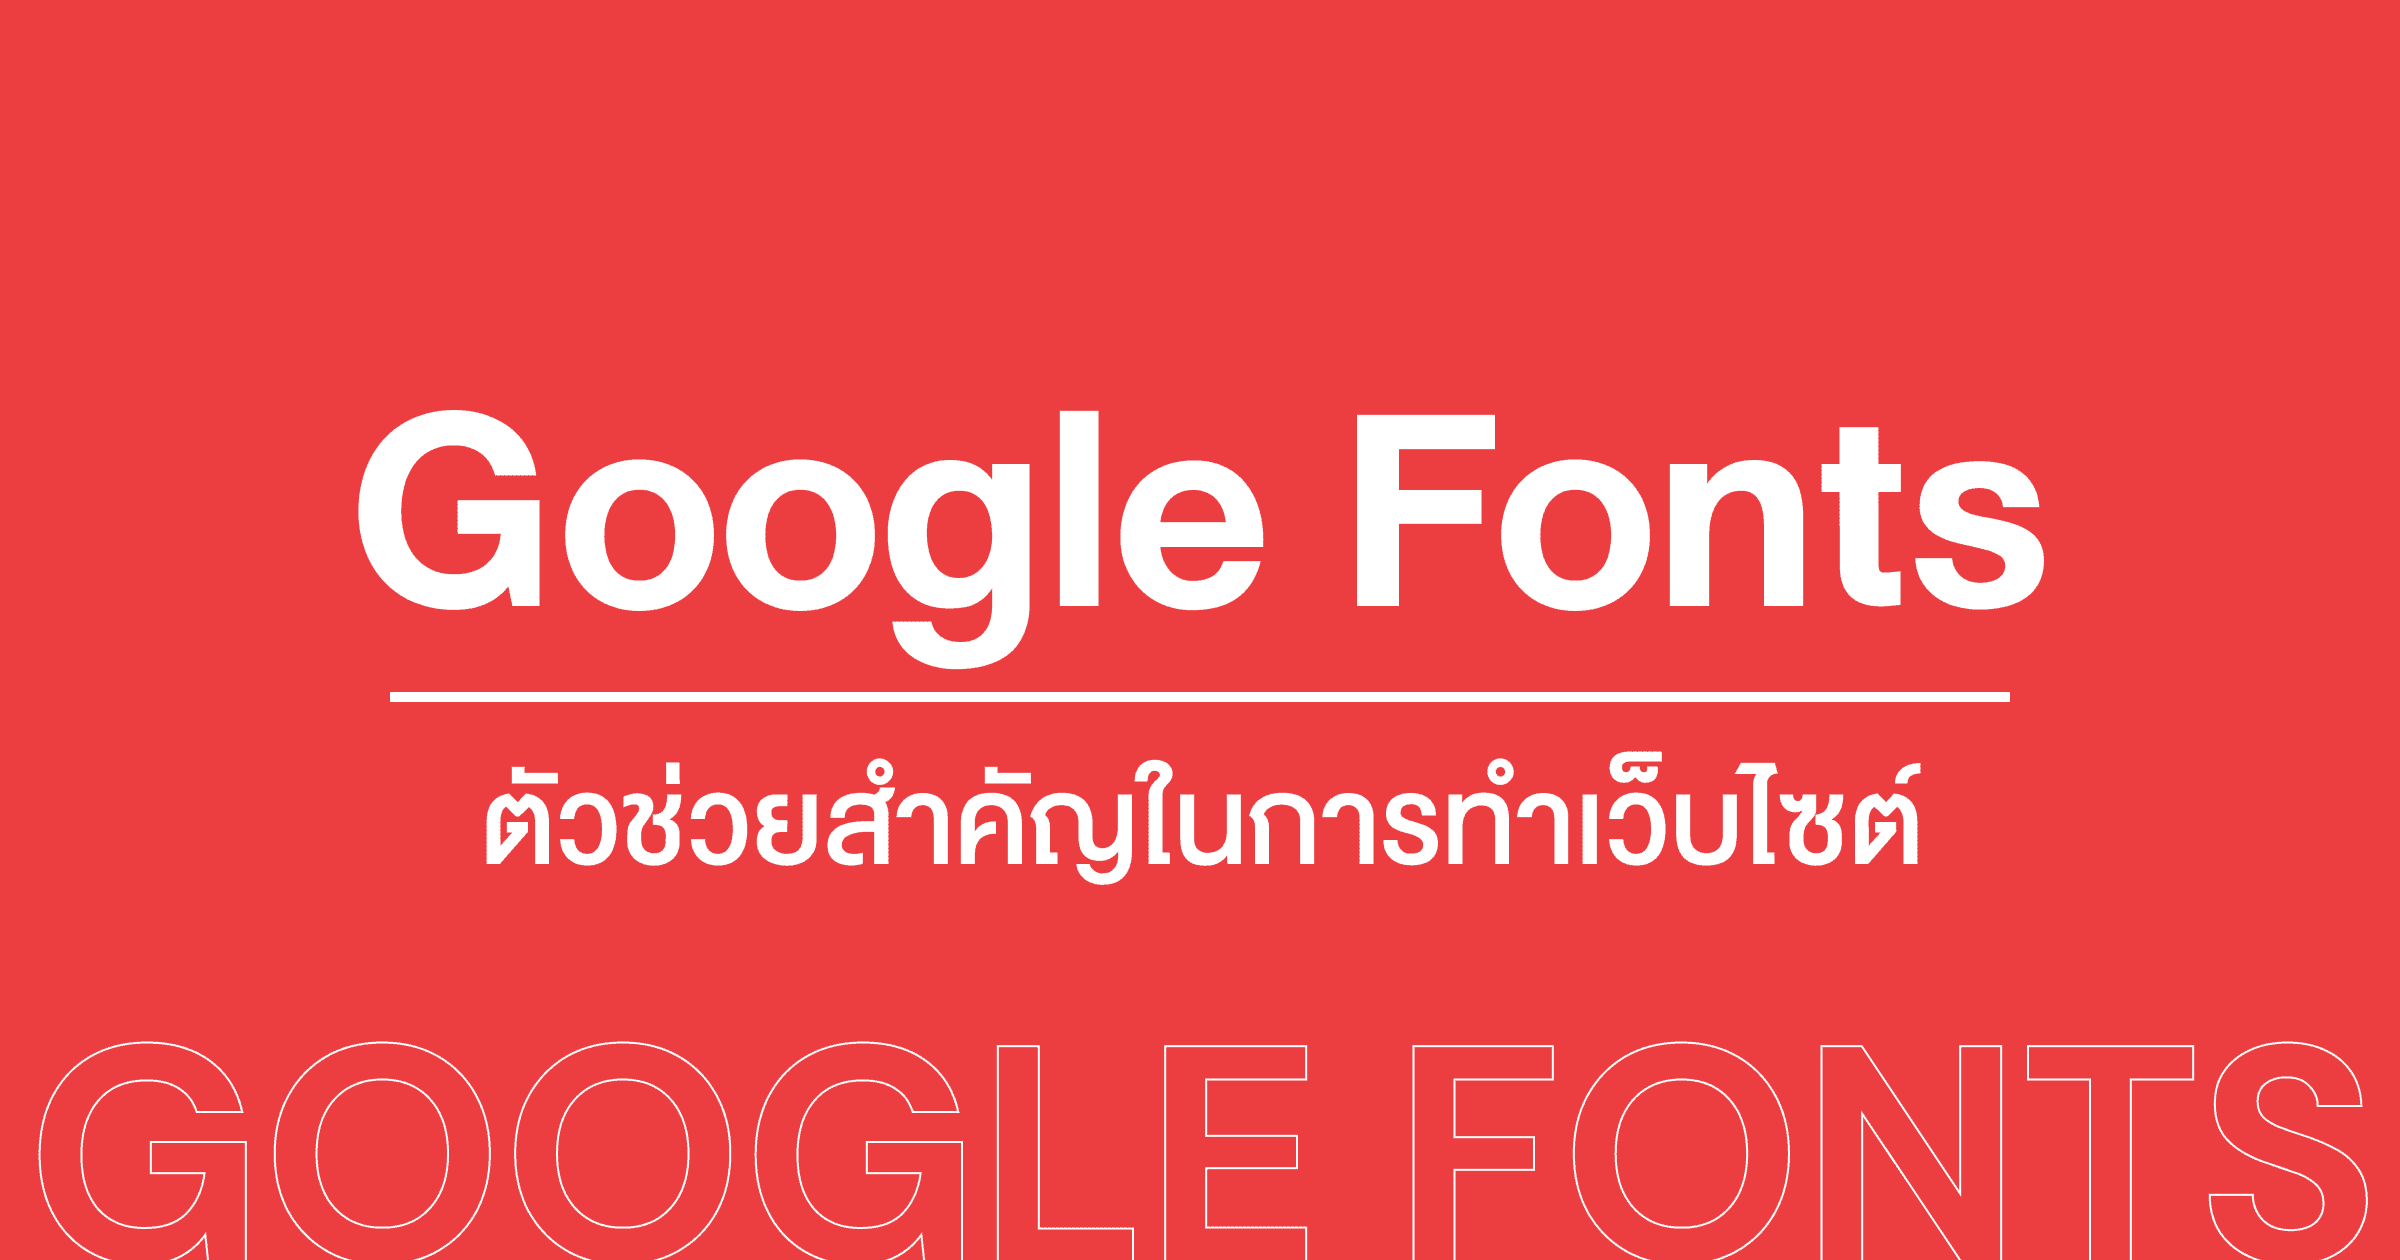 Google Font ตัวช่วยสำคัญในการทำเว็บไซต์